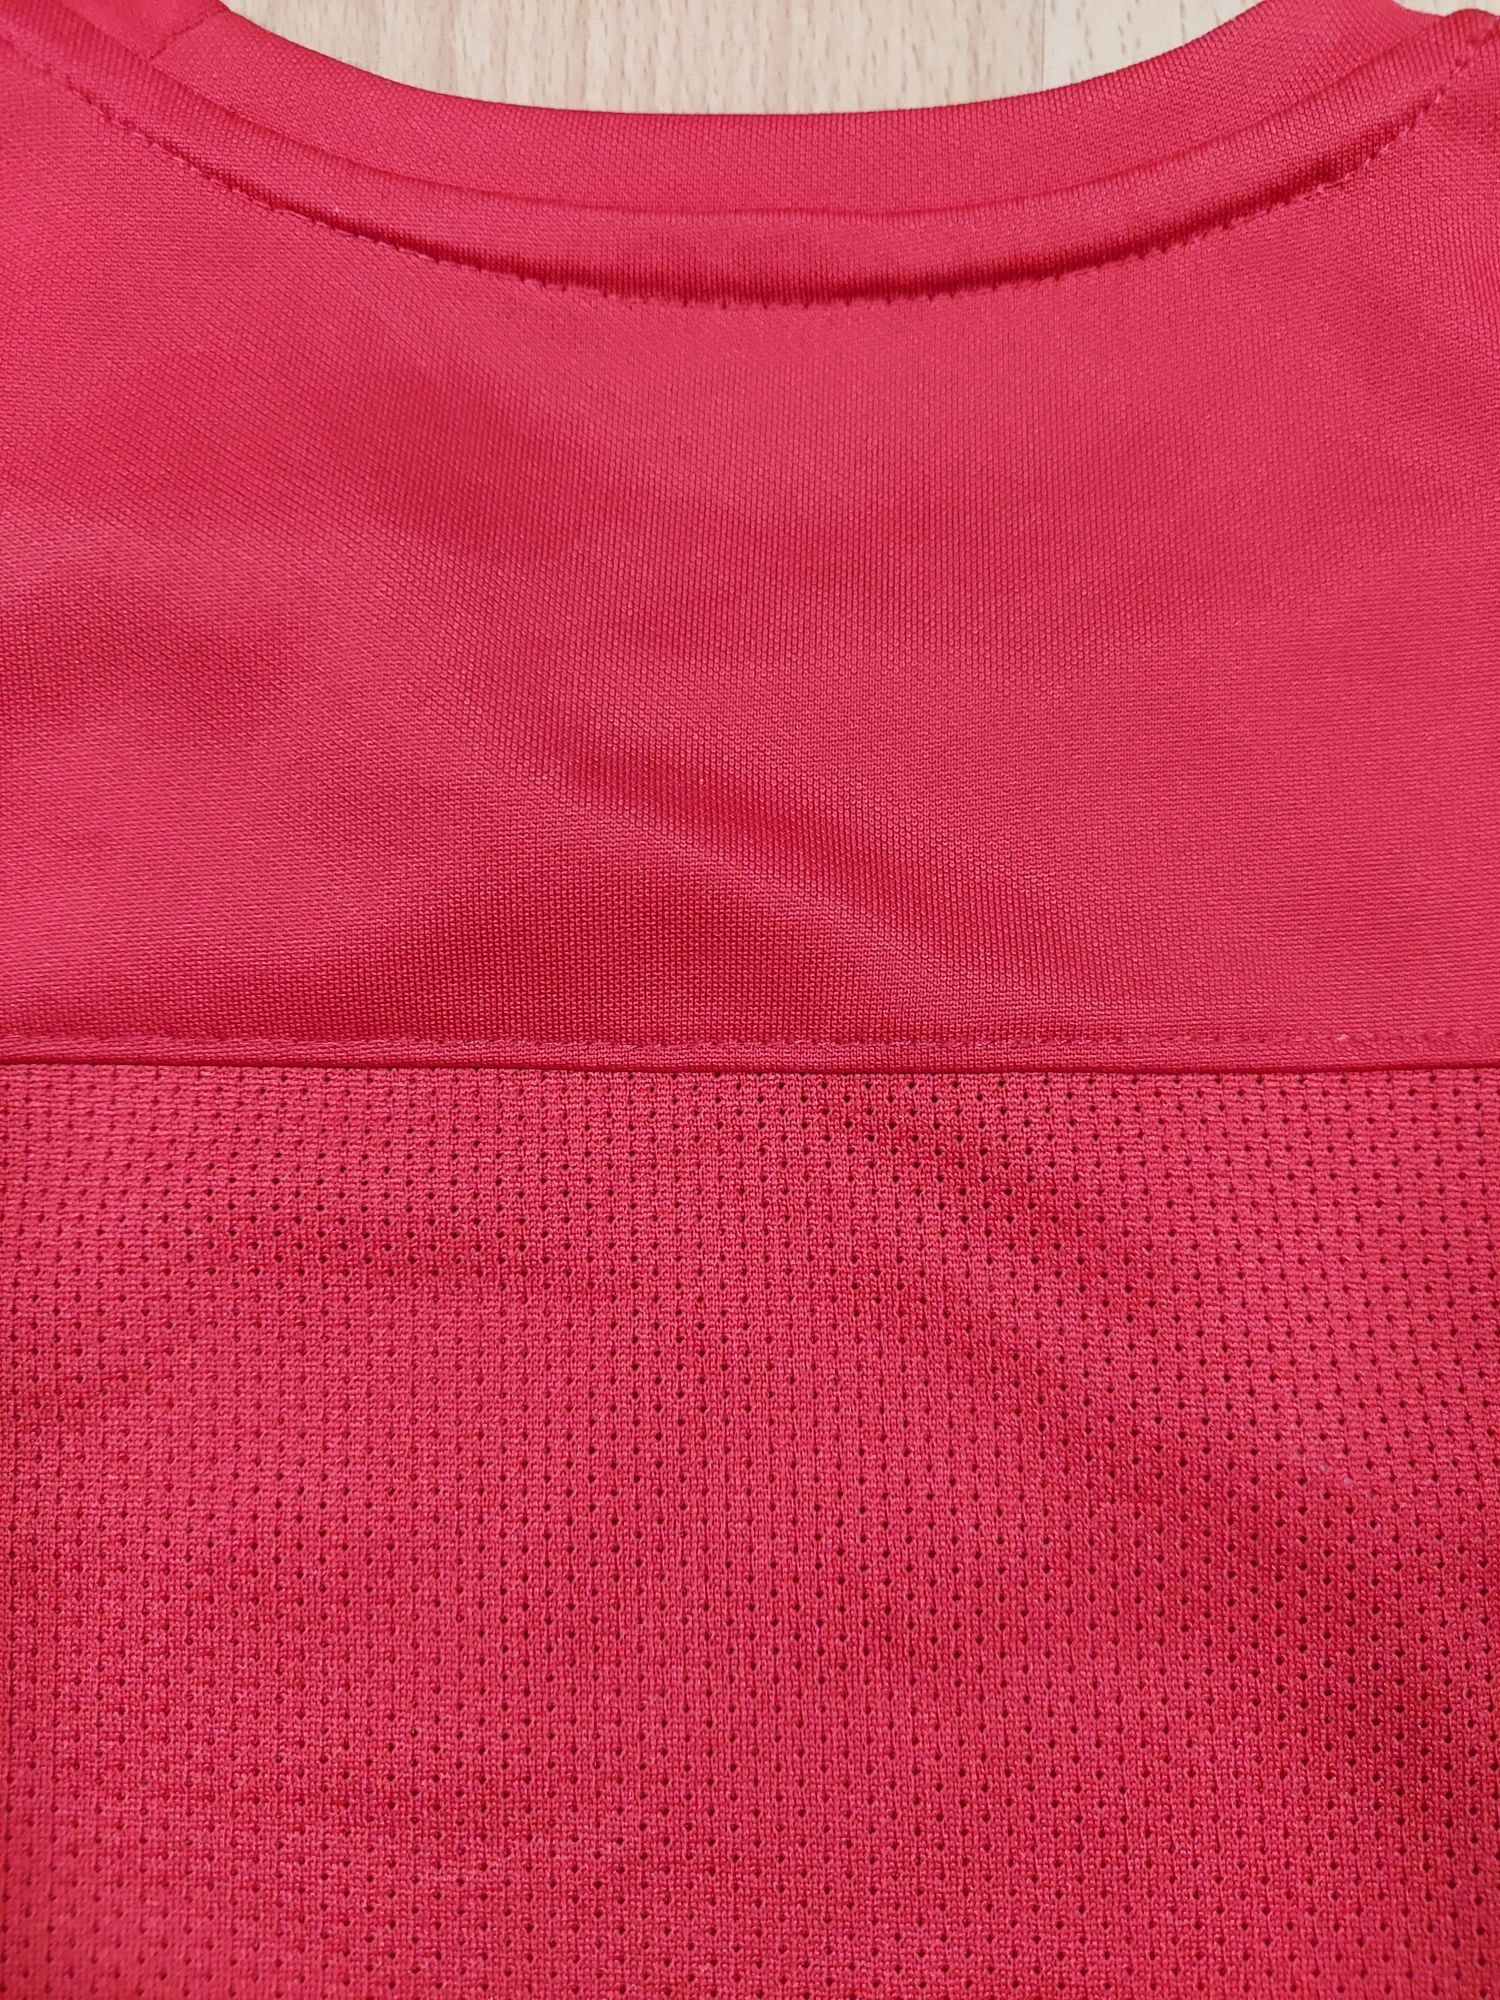 Koszulka sportowa NIKE Dri-fit roz.147-158 , trening